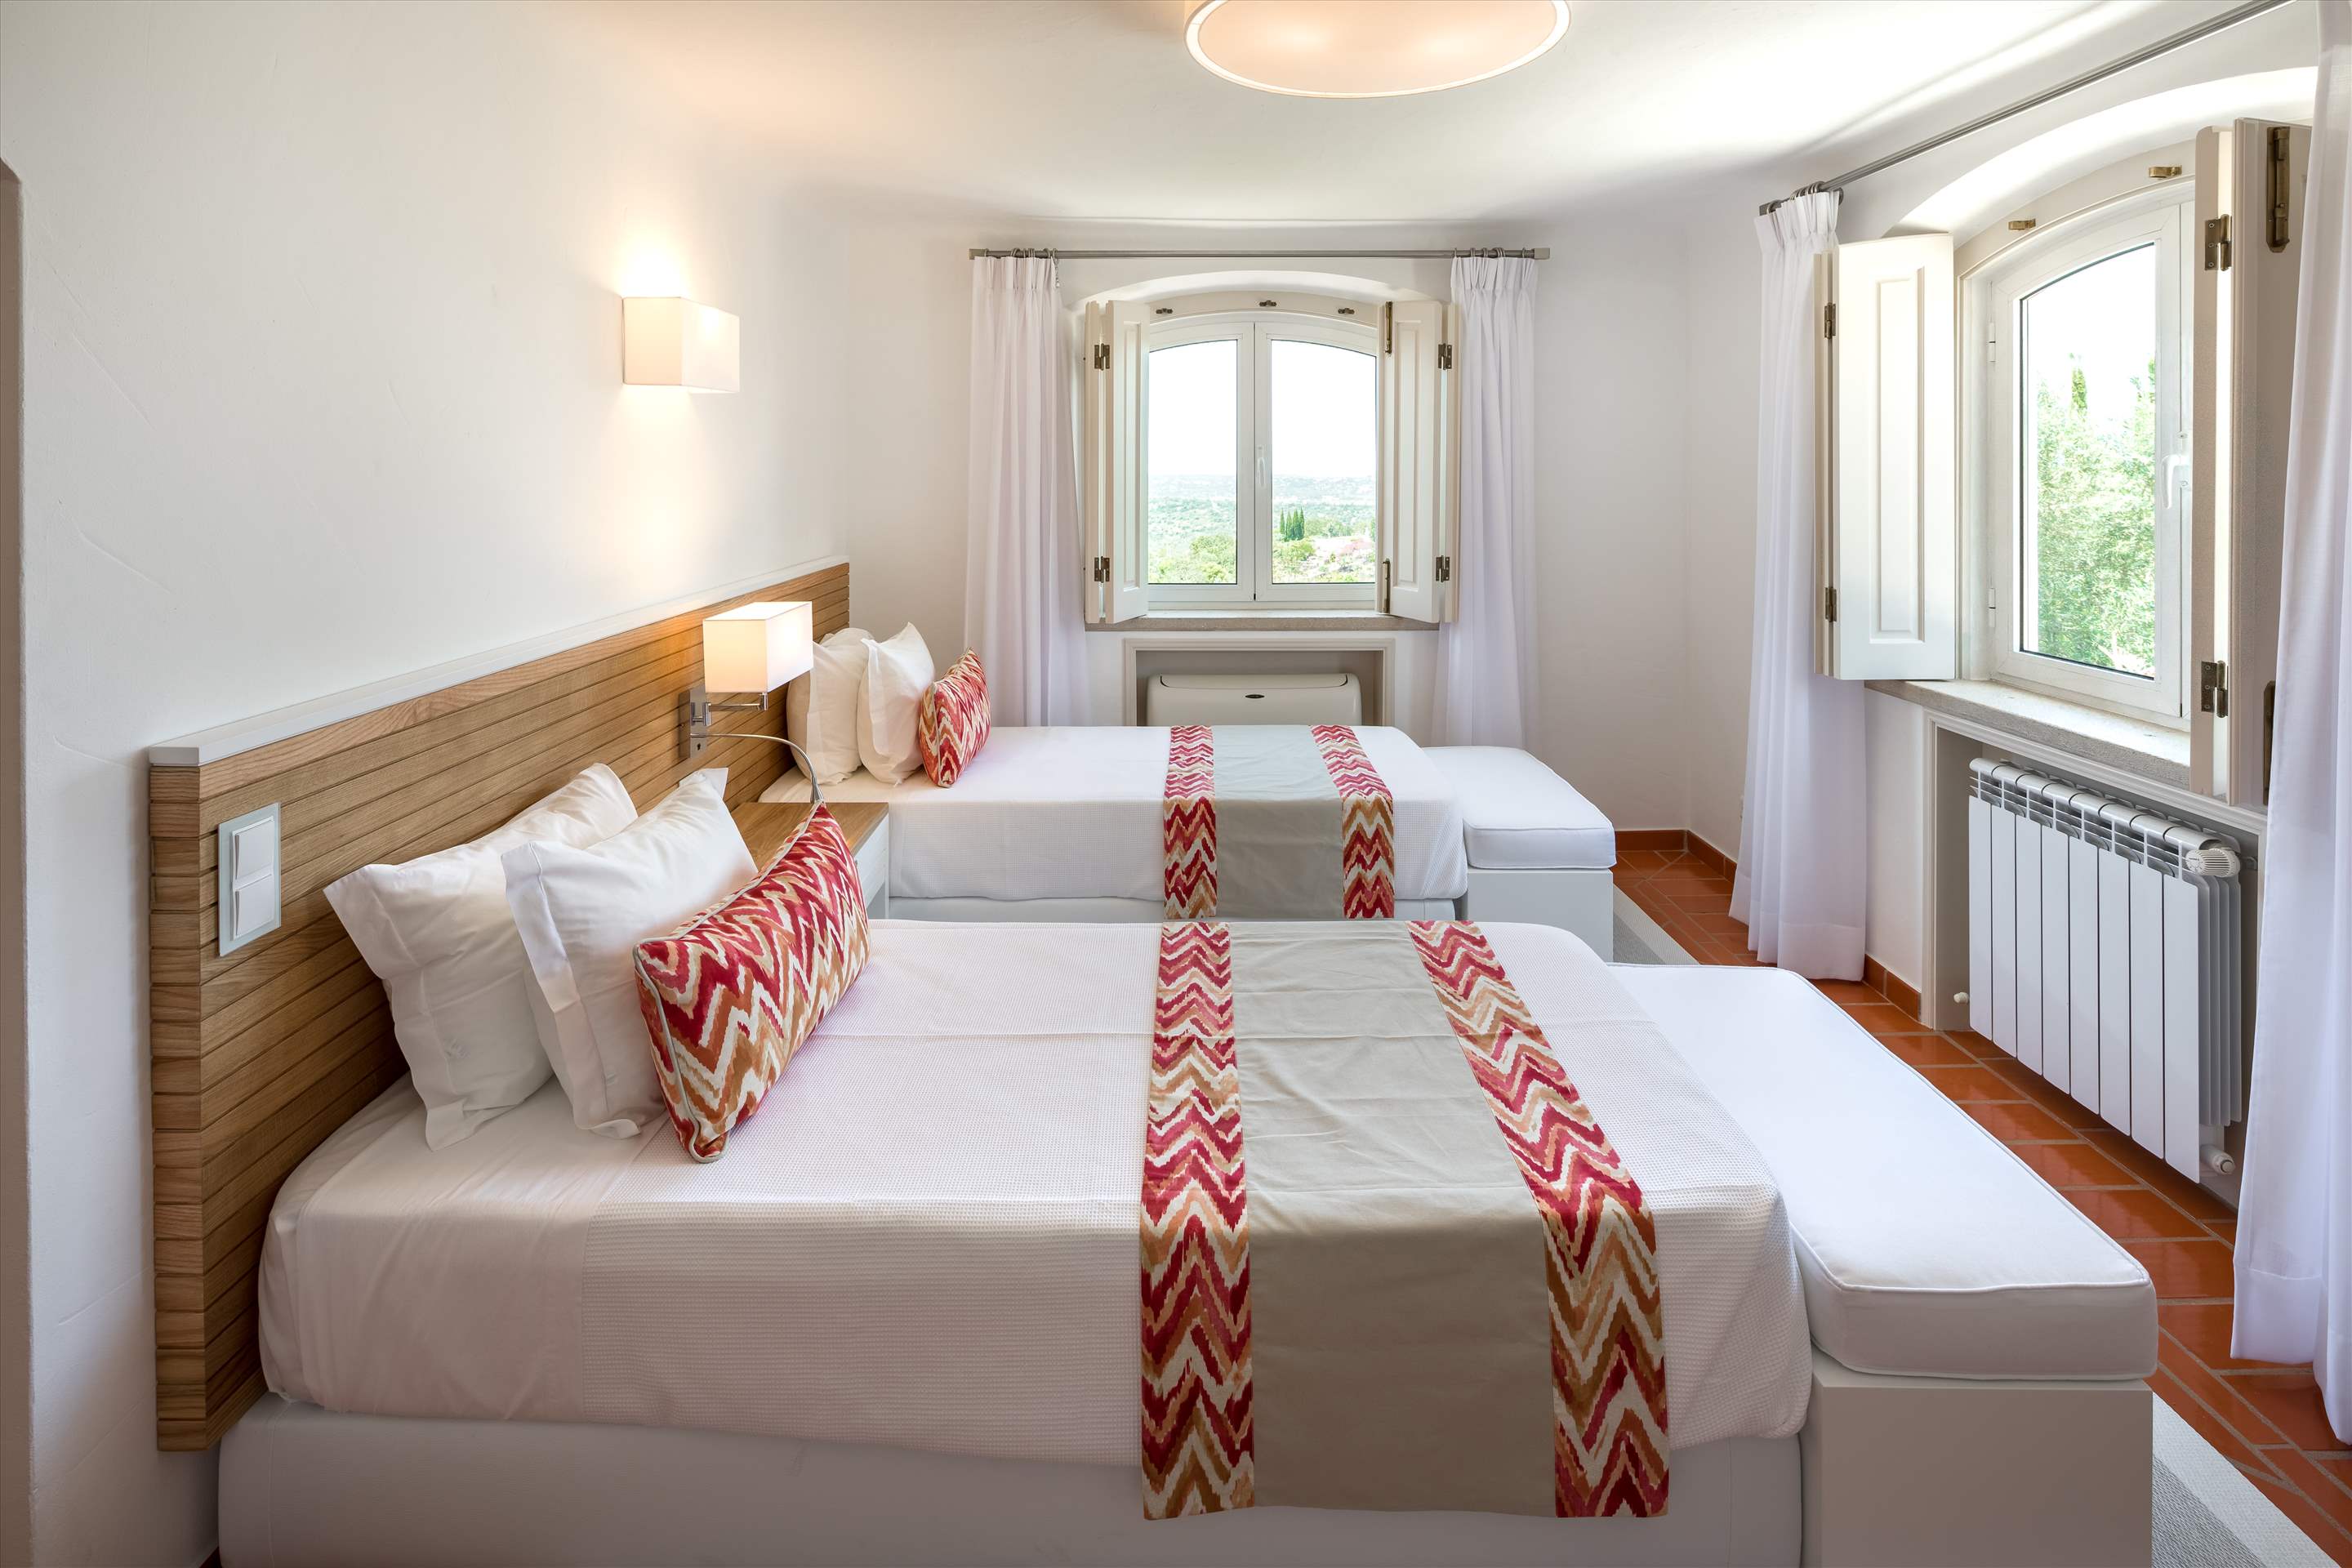 Casa da Montanha, up to 10 persons, 5 bedroom villa in Vilamoura Area, Algarve Photo #25